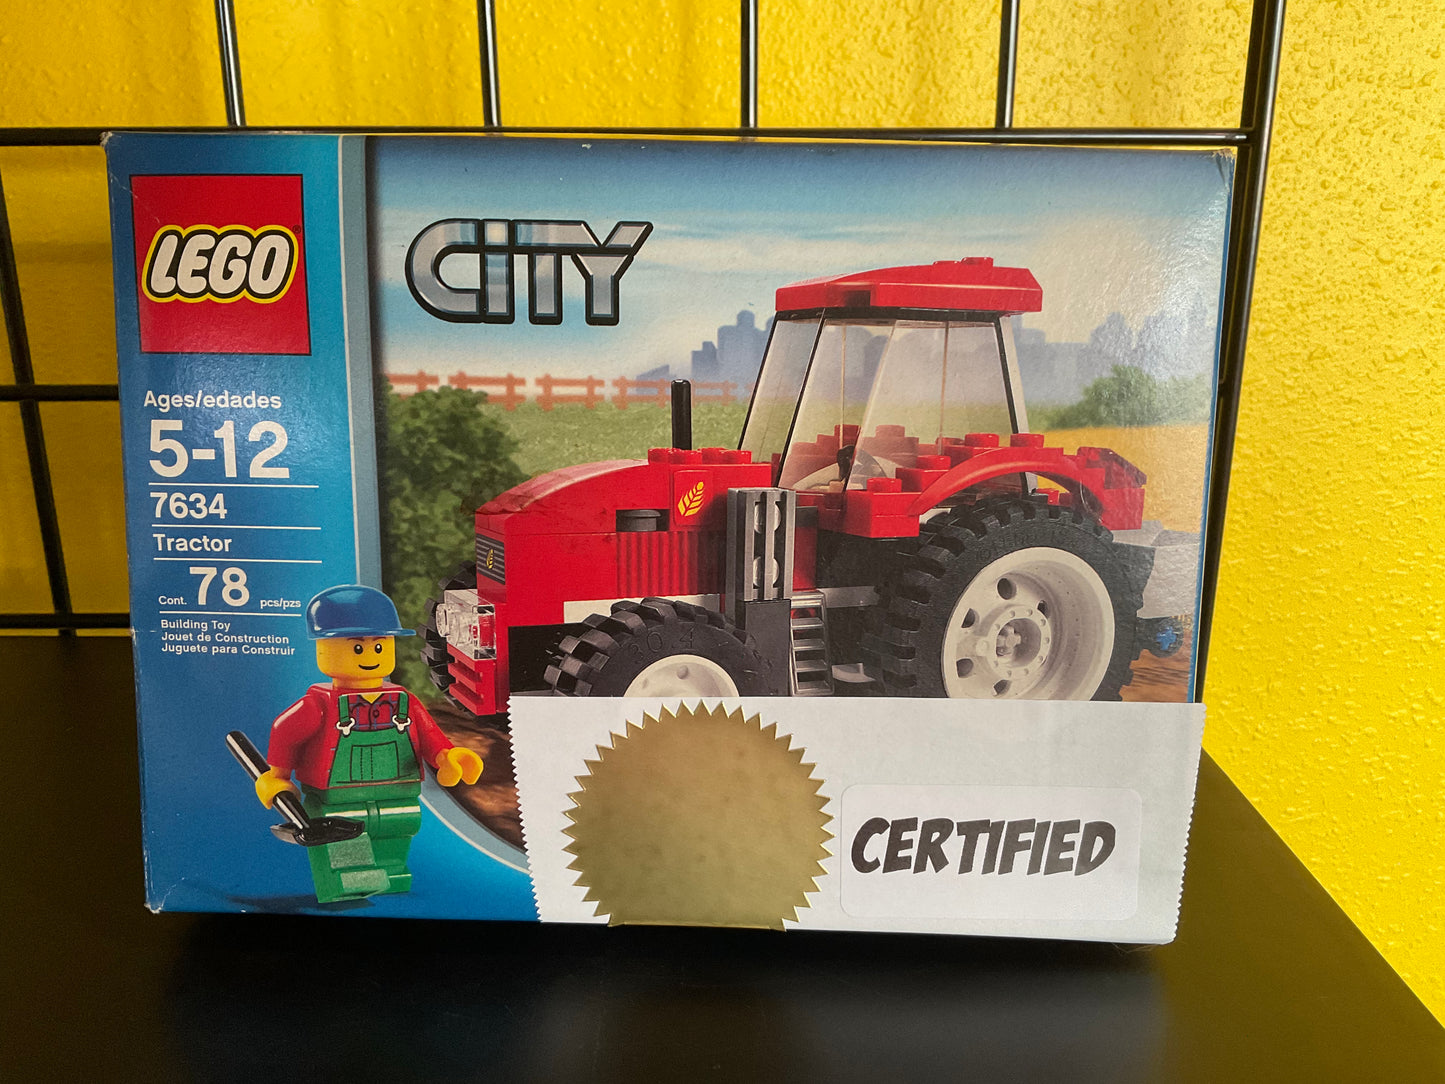 Tractor - Certified